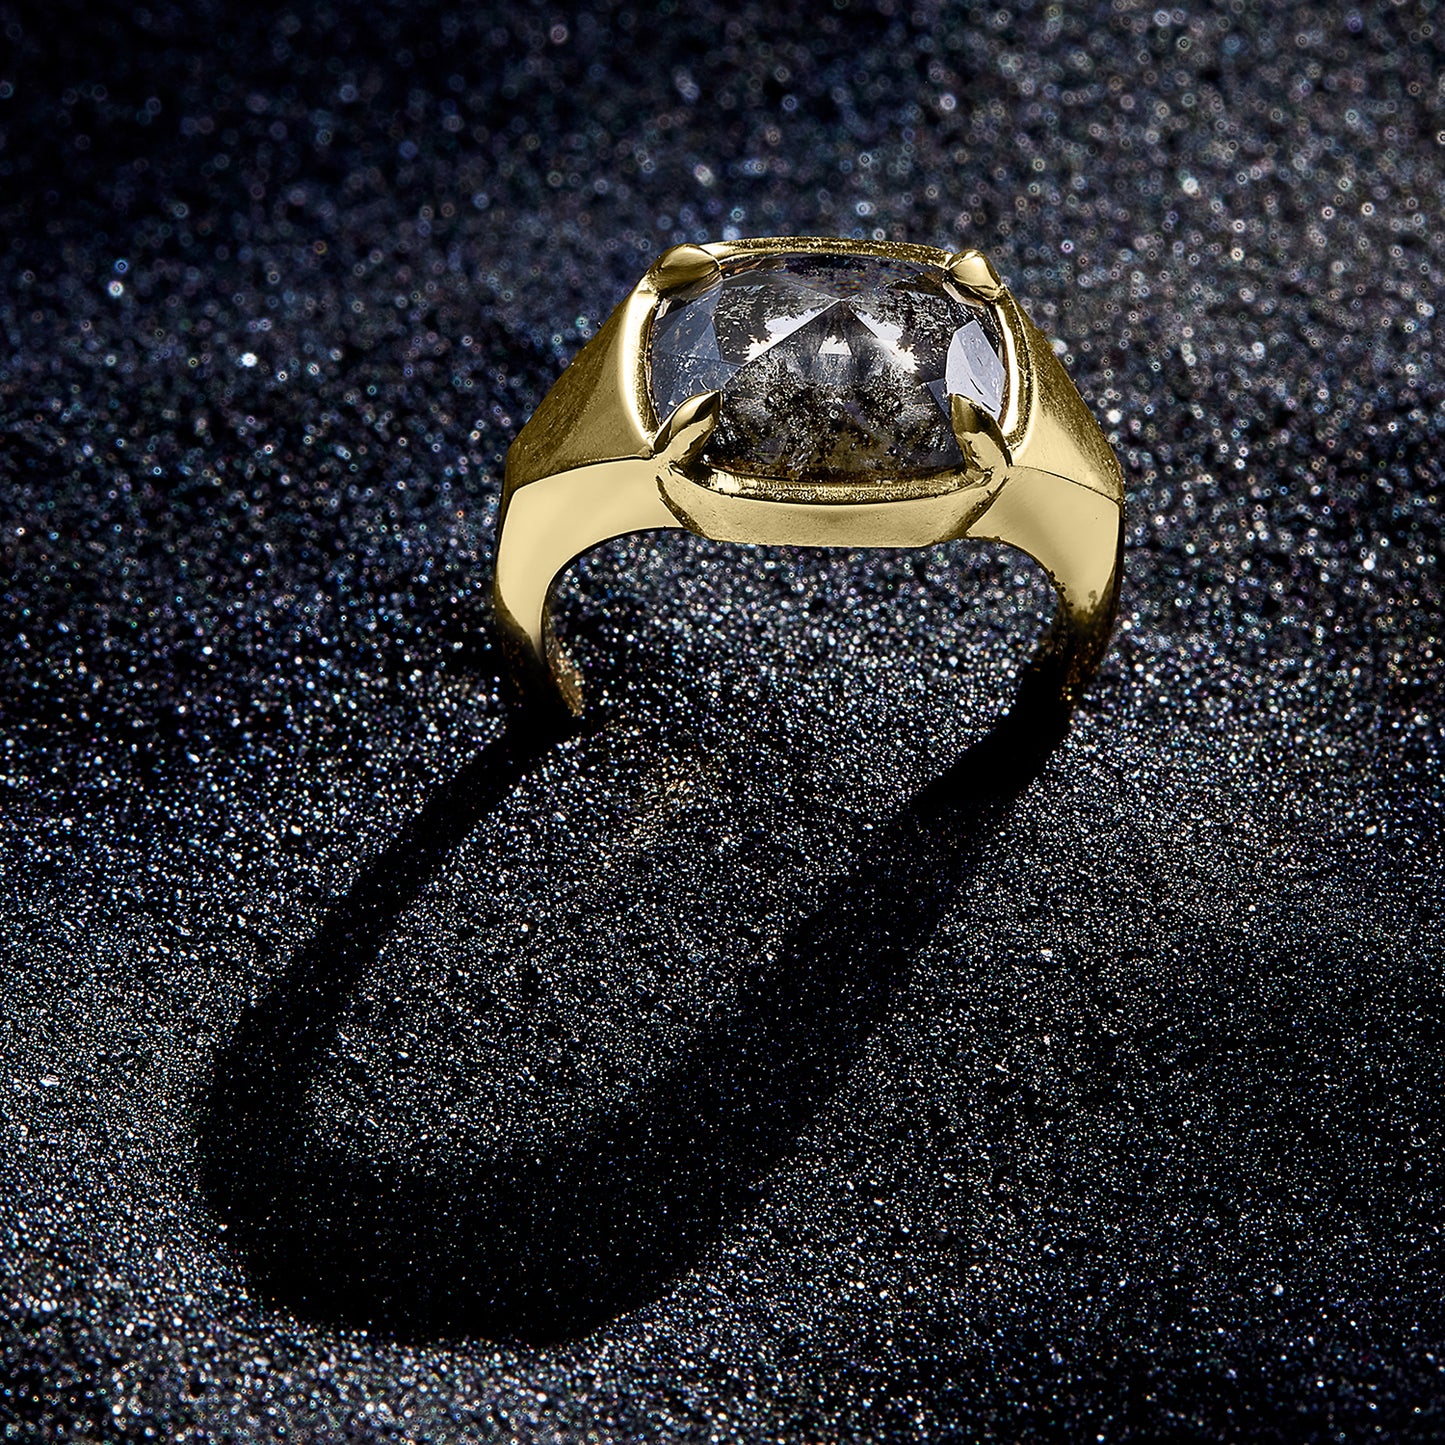 Speckled Diamond Empire Ring